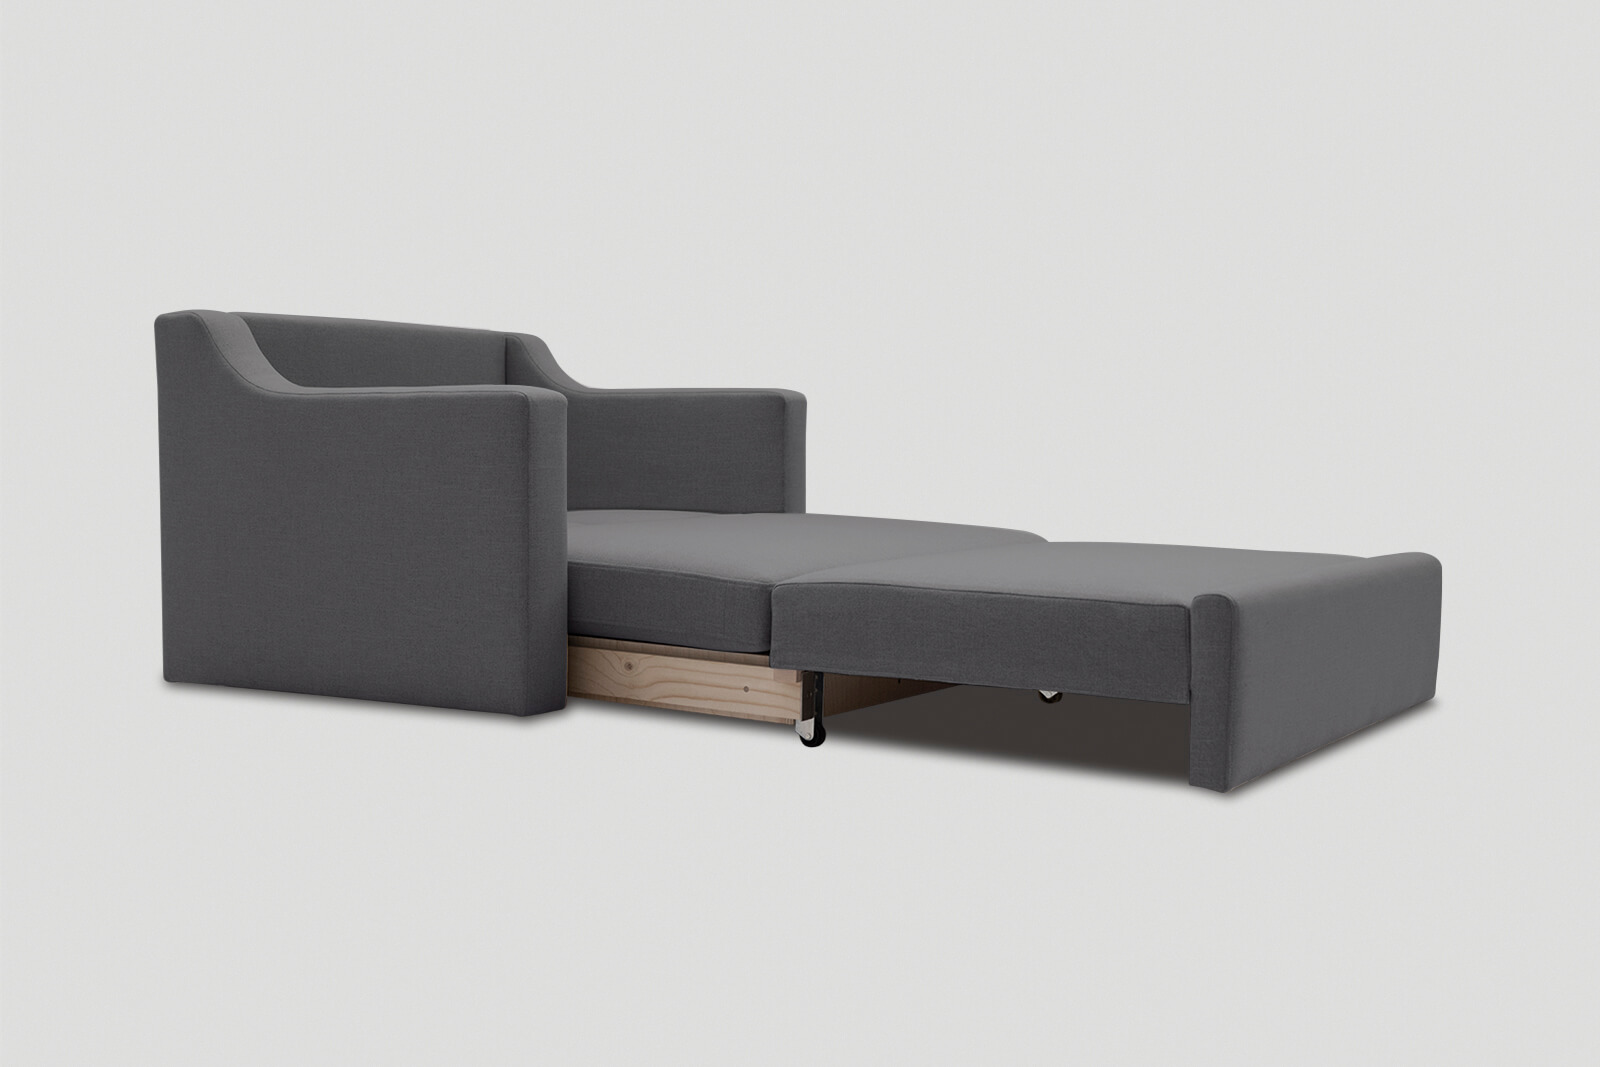 HBSB02-single-sofa-bed-seal-3q-bed